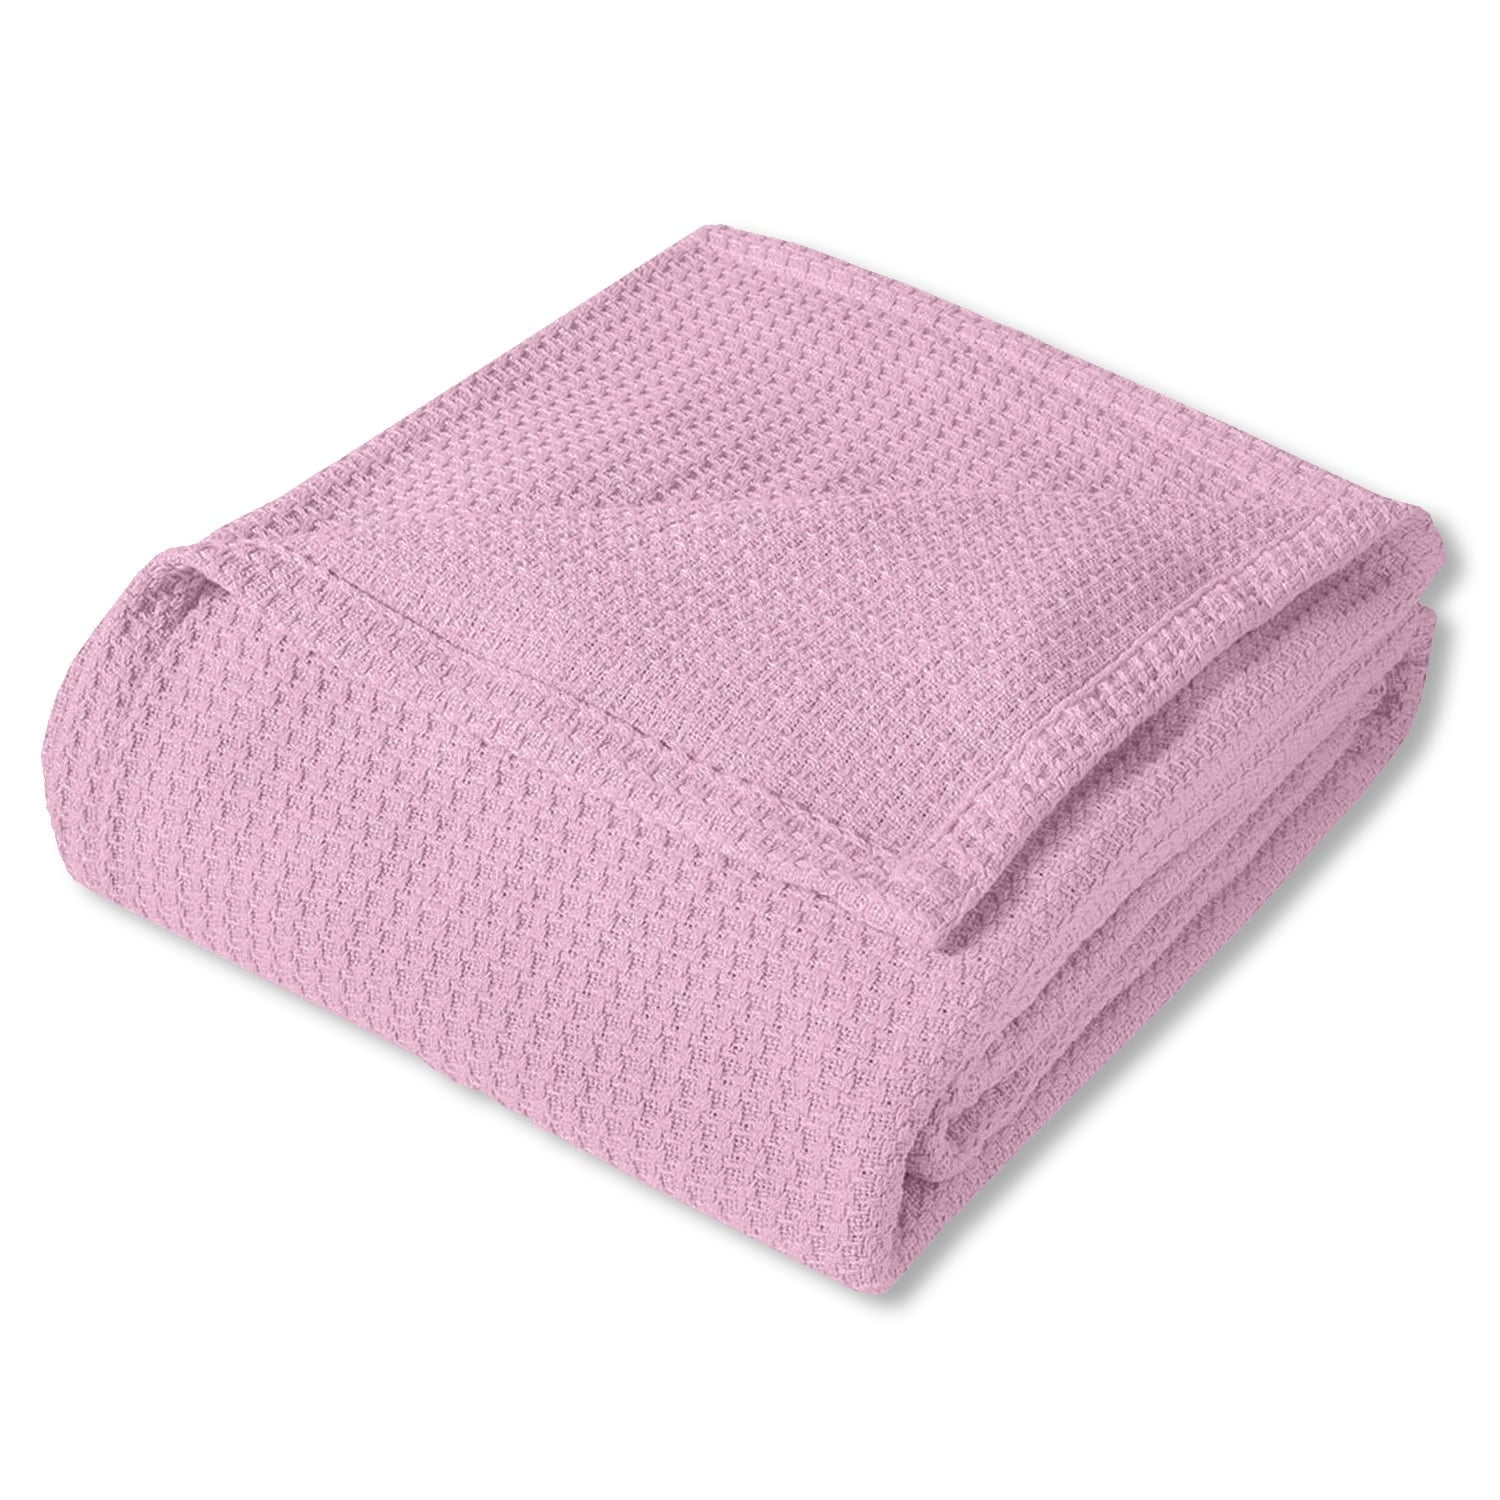 Details about   100%Cotton Basket Weave Thermal Bed Blanket Breathable Super Soft & Comfortable 